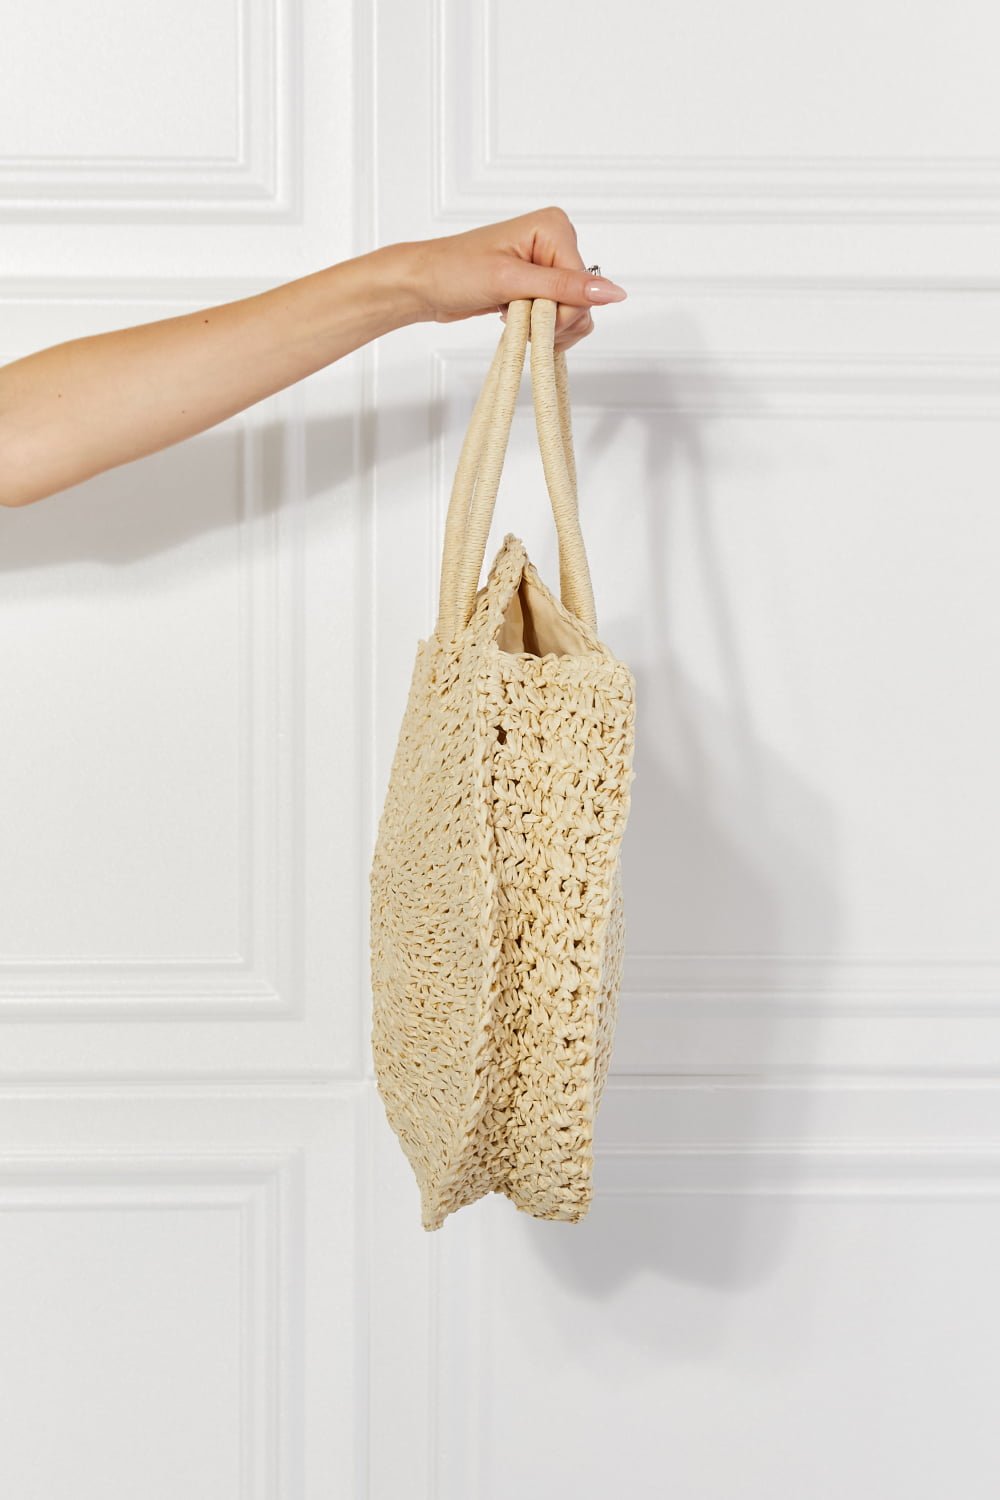 Justin Taylor Beach Date Straw Rattan Handbag in Ivory | Sugarz Chique Boutique